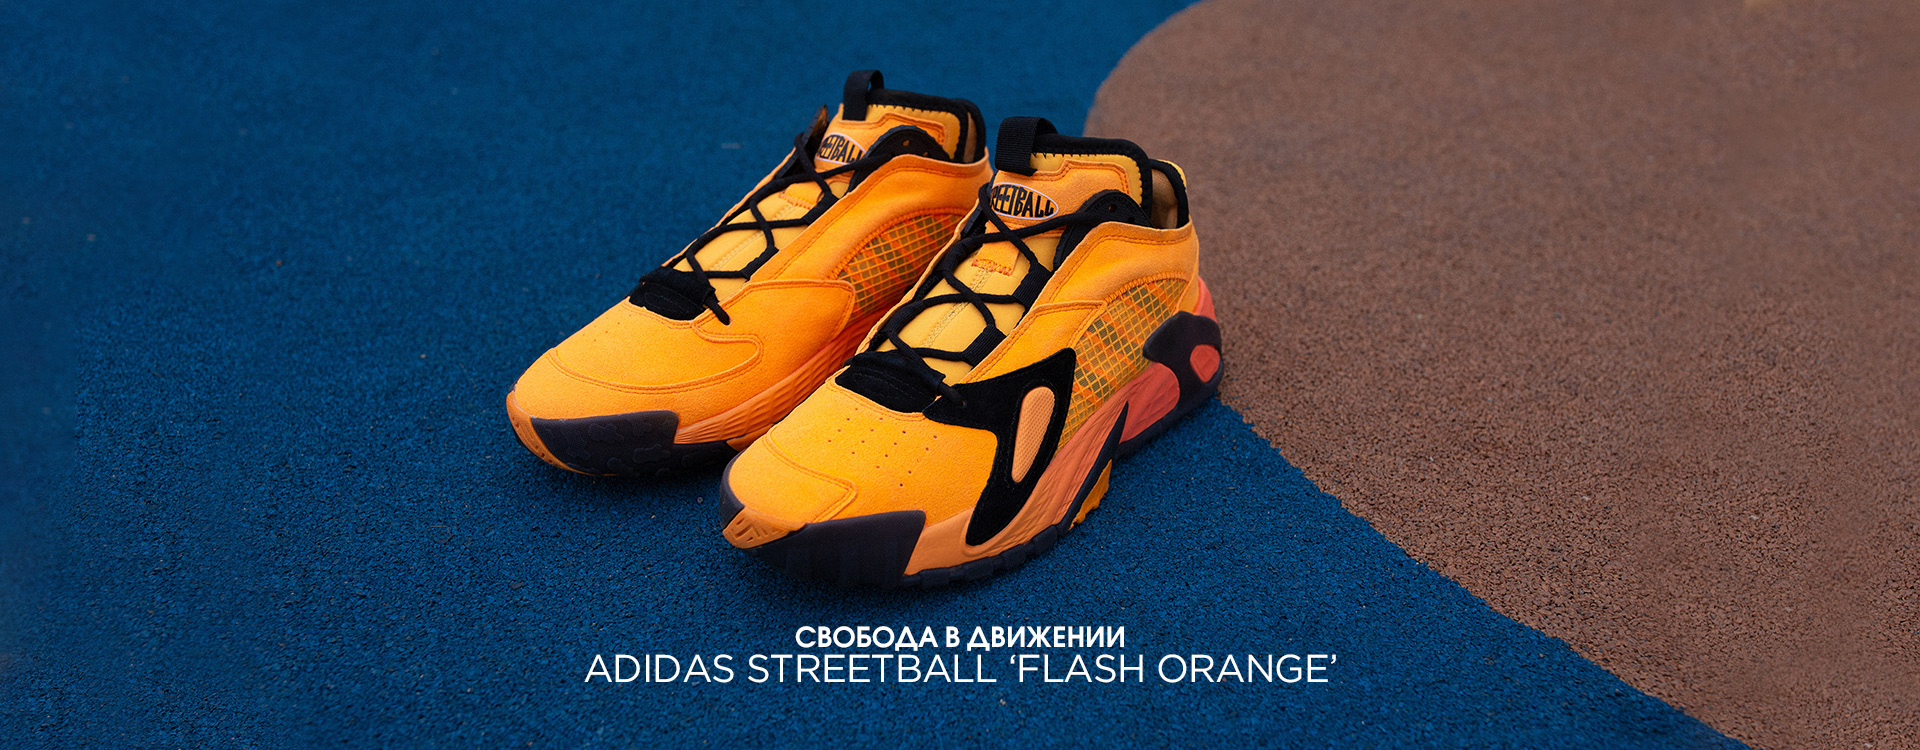 adidas streetball flash orange